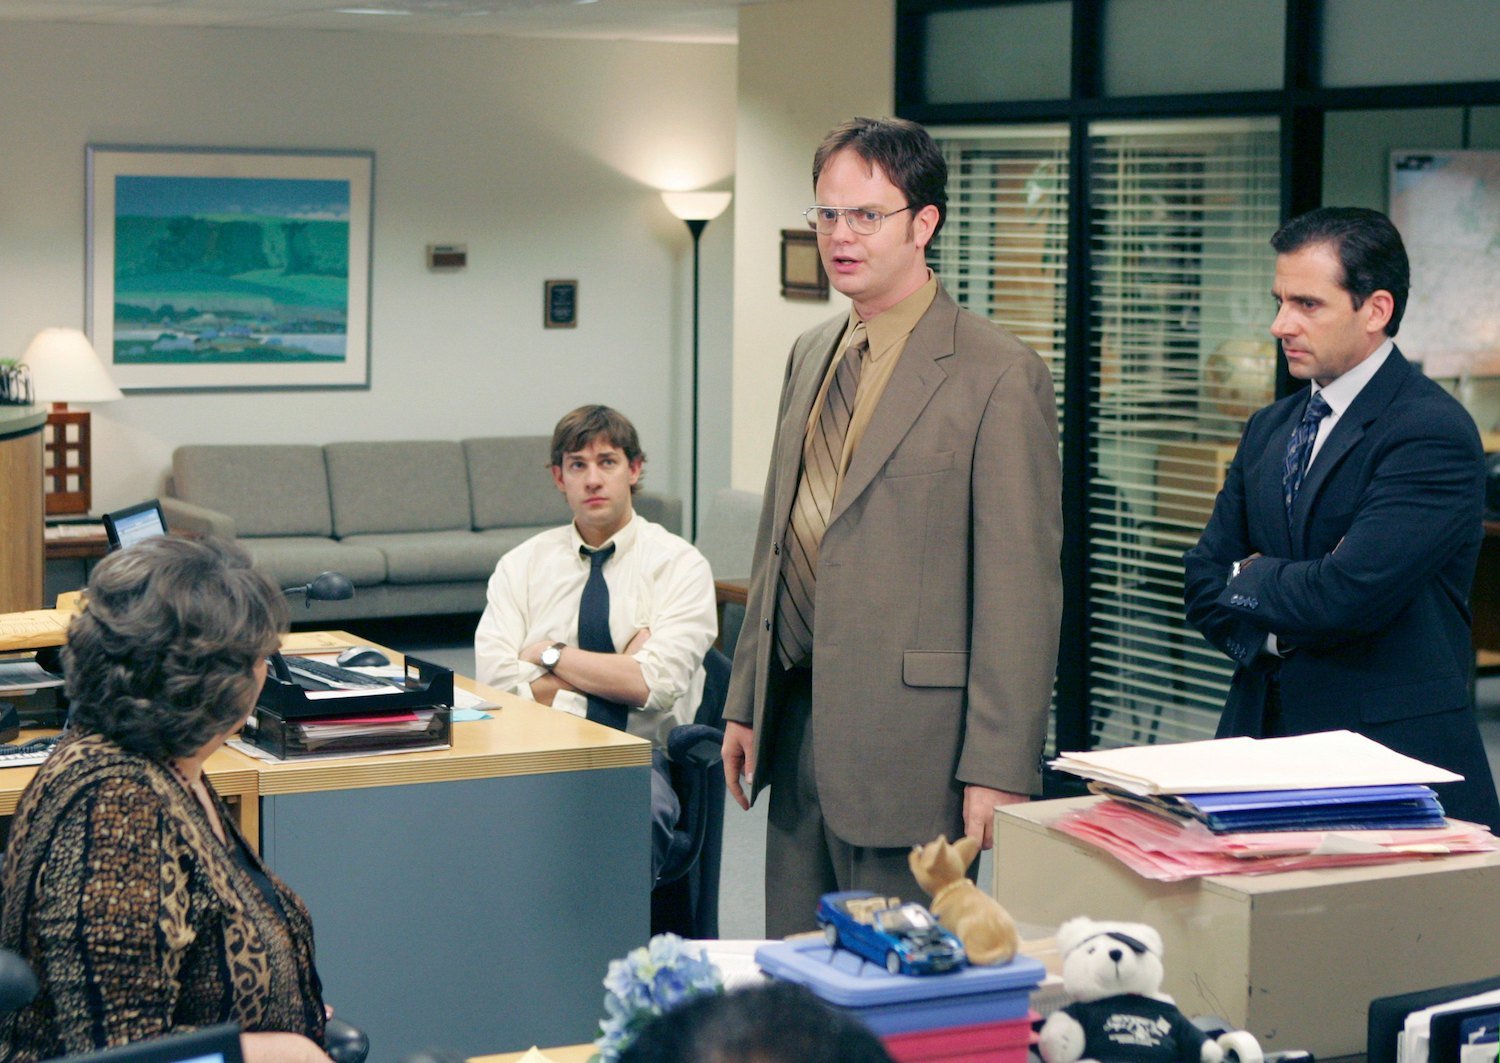 'The Office' stars in character on set. Phyllis Smith as Phyllis Lapin, John Krasinski as Jim Halpert, Rainn Wilson as Dwight Schrute, and Steve Carell as Michael Scott.